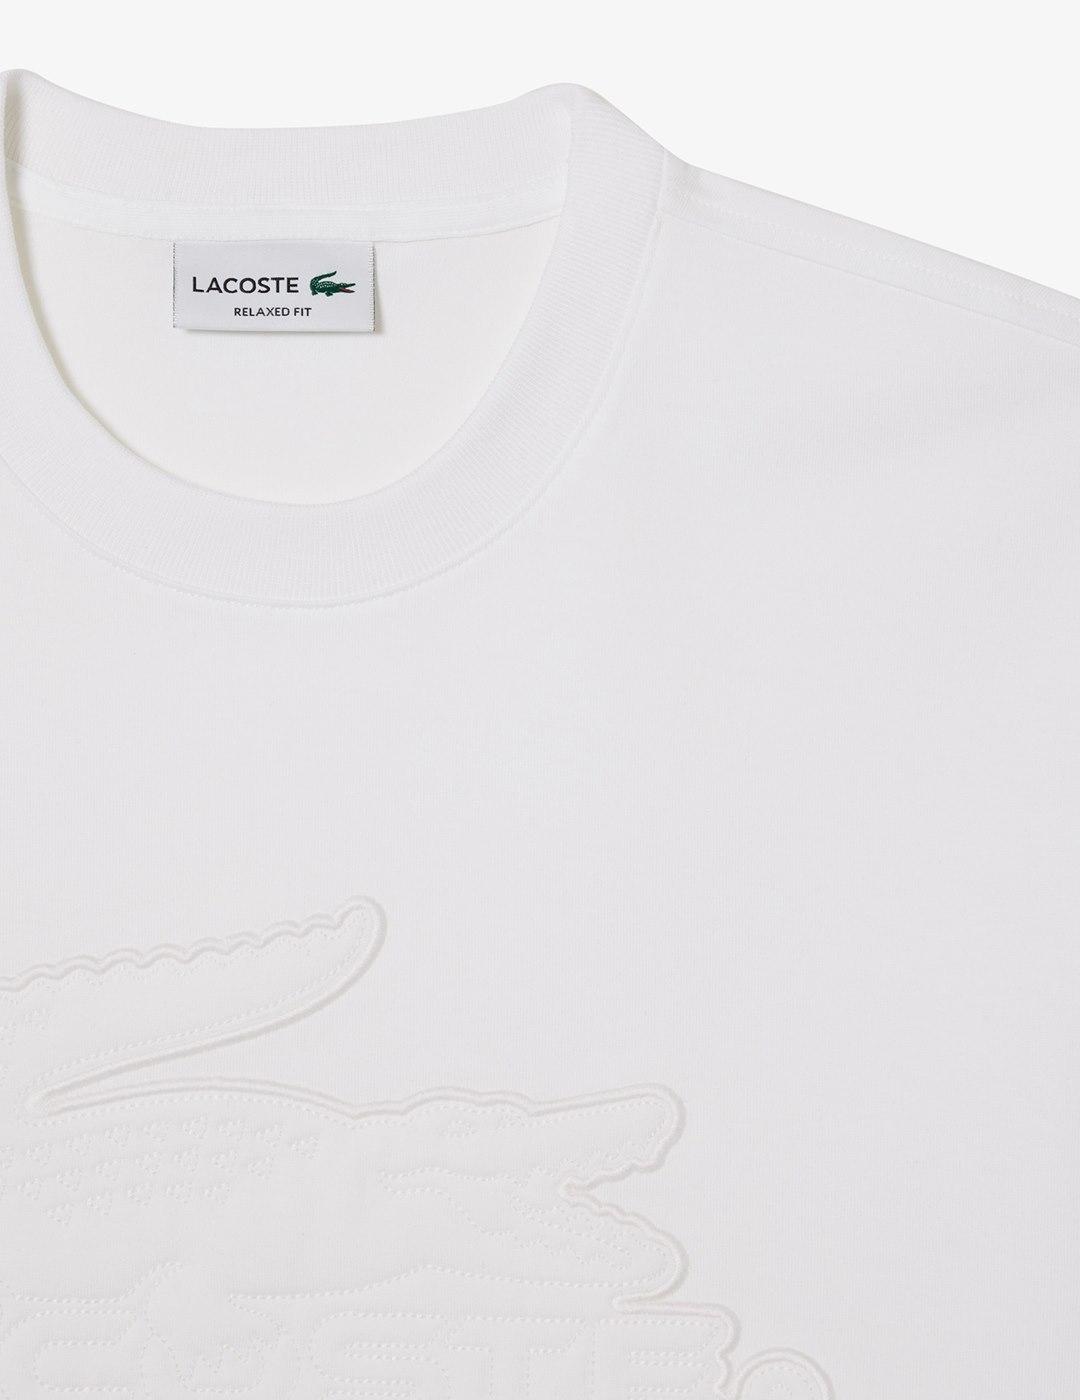 Camiseta Lacoste TH2104 Blanco